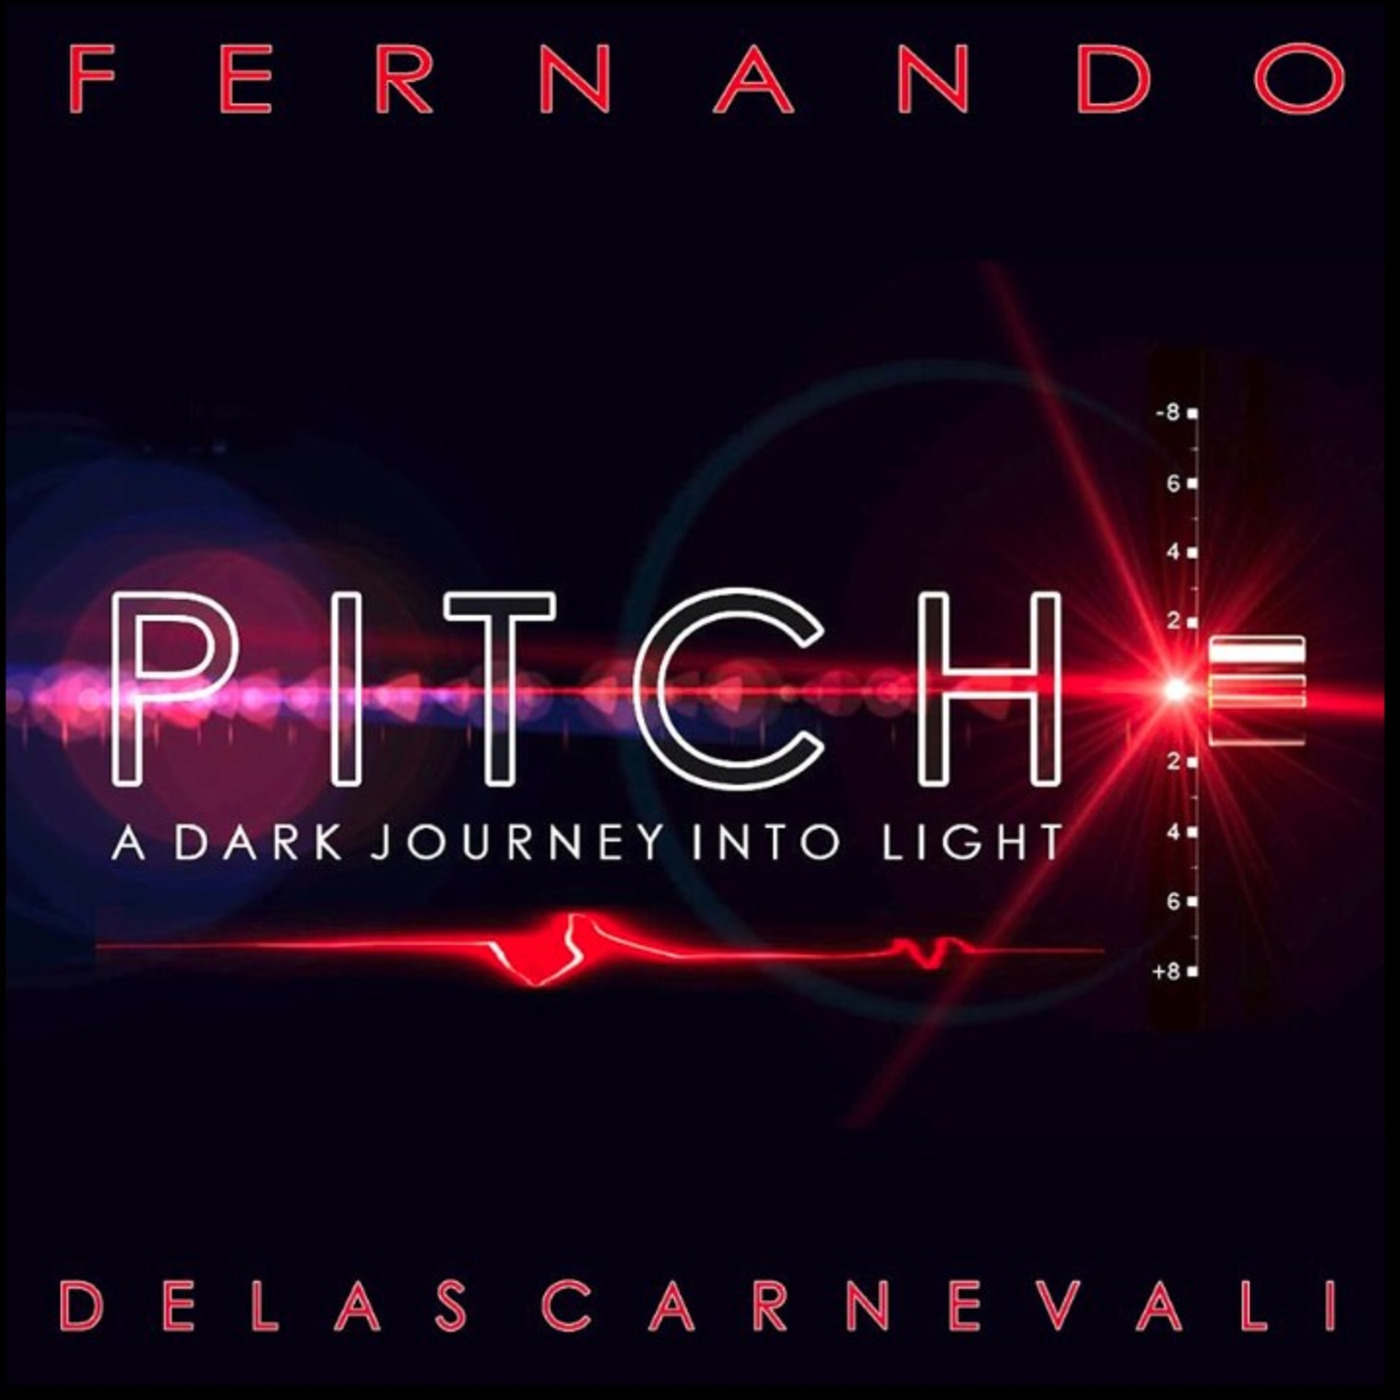 Fernando - Pitch (A Dark Journey Into Light) - May 2019